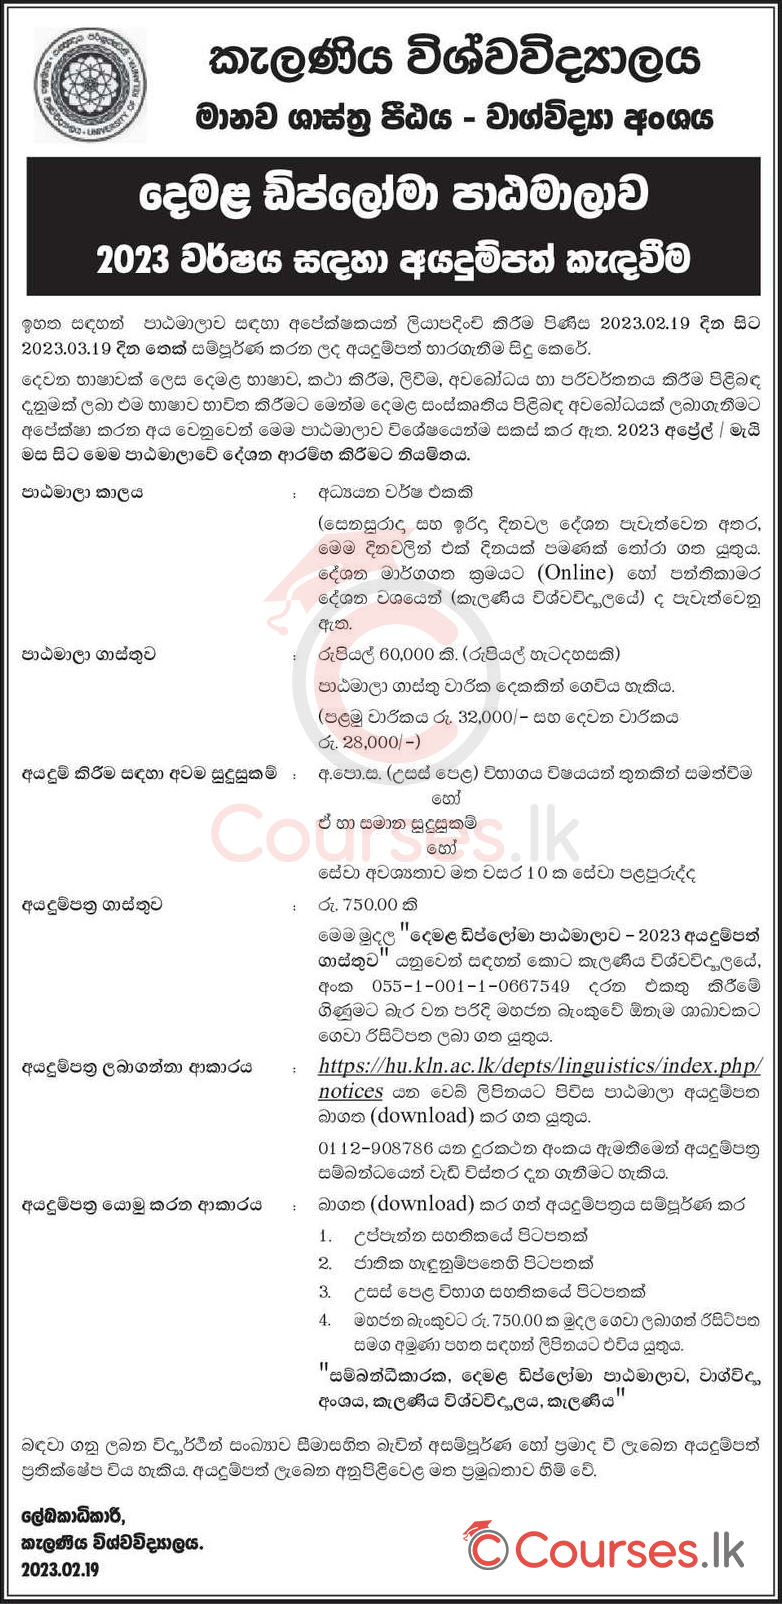 Call for Applications - Diploma in Tamil (2023) - University of Kelaniya